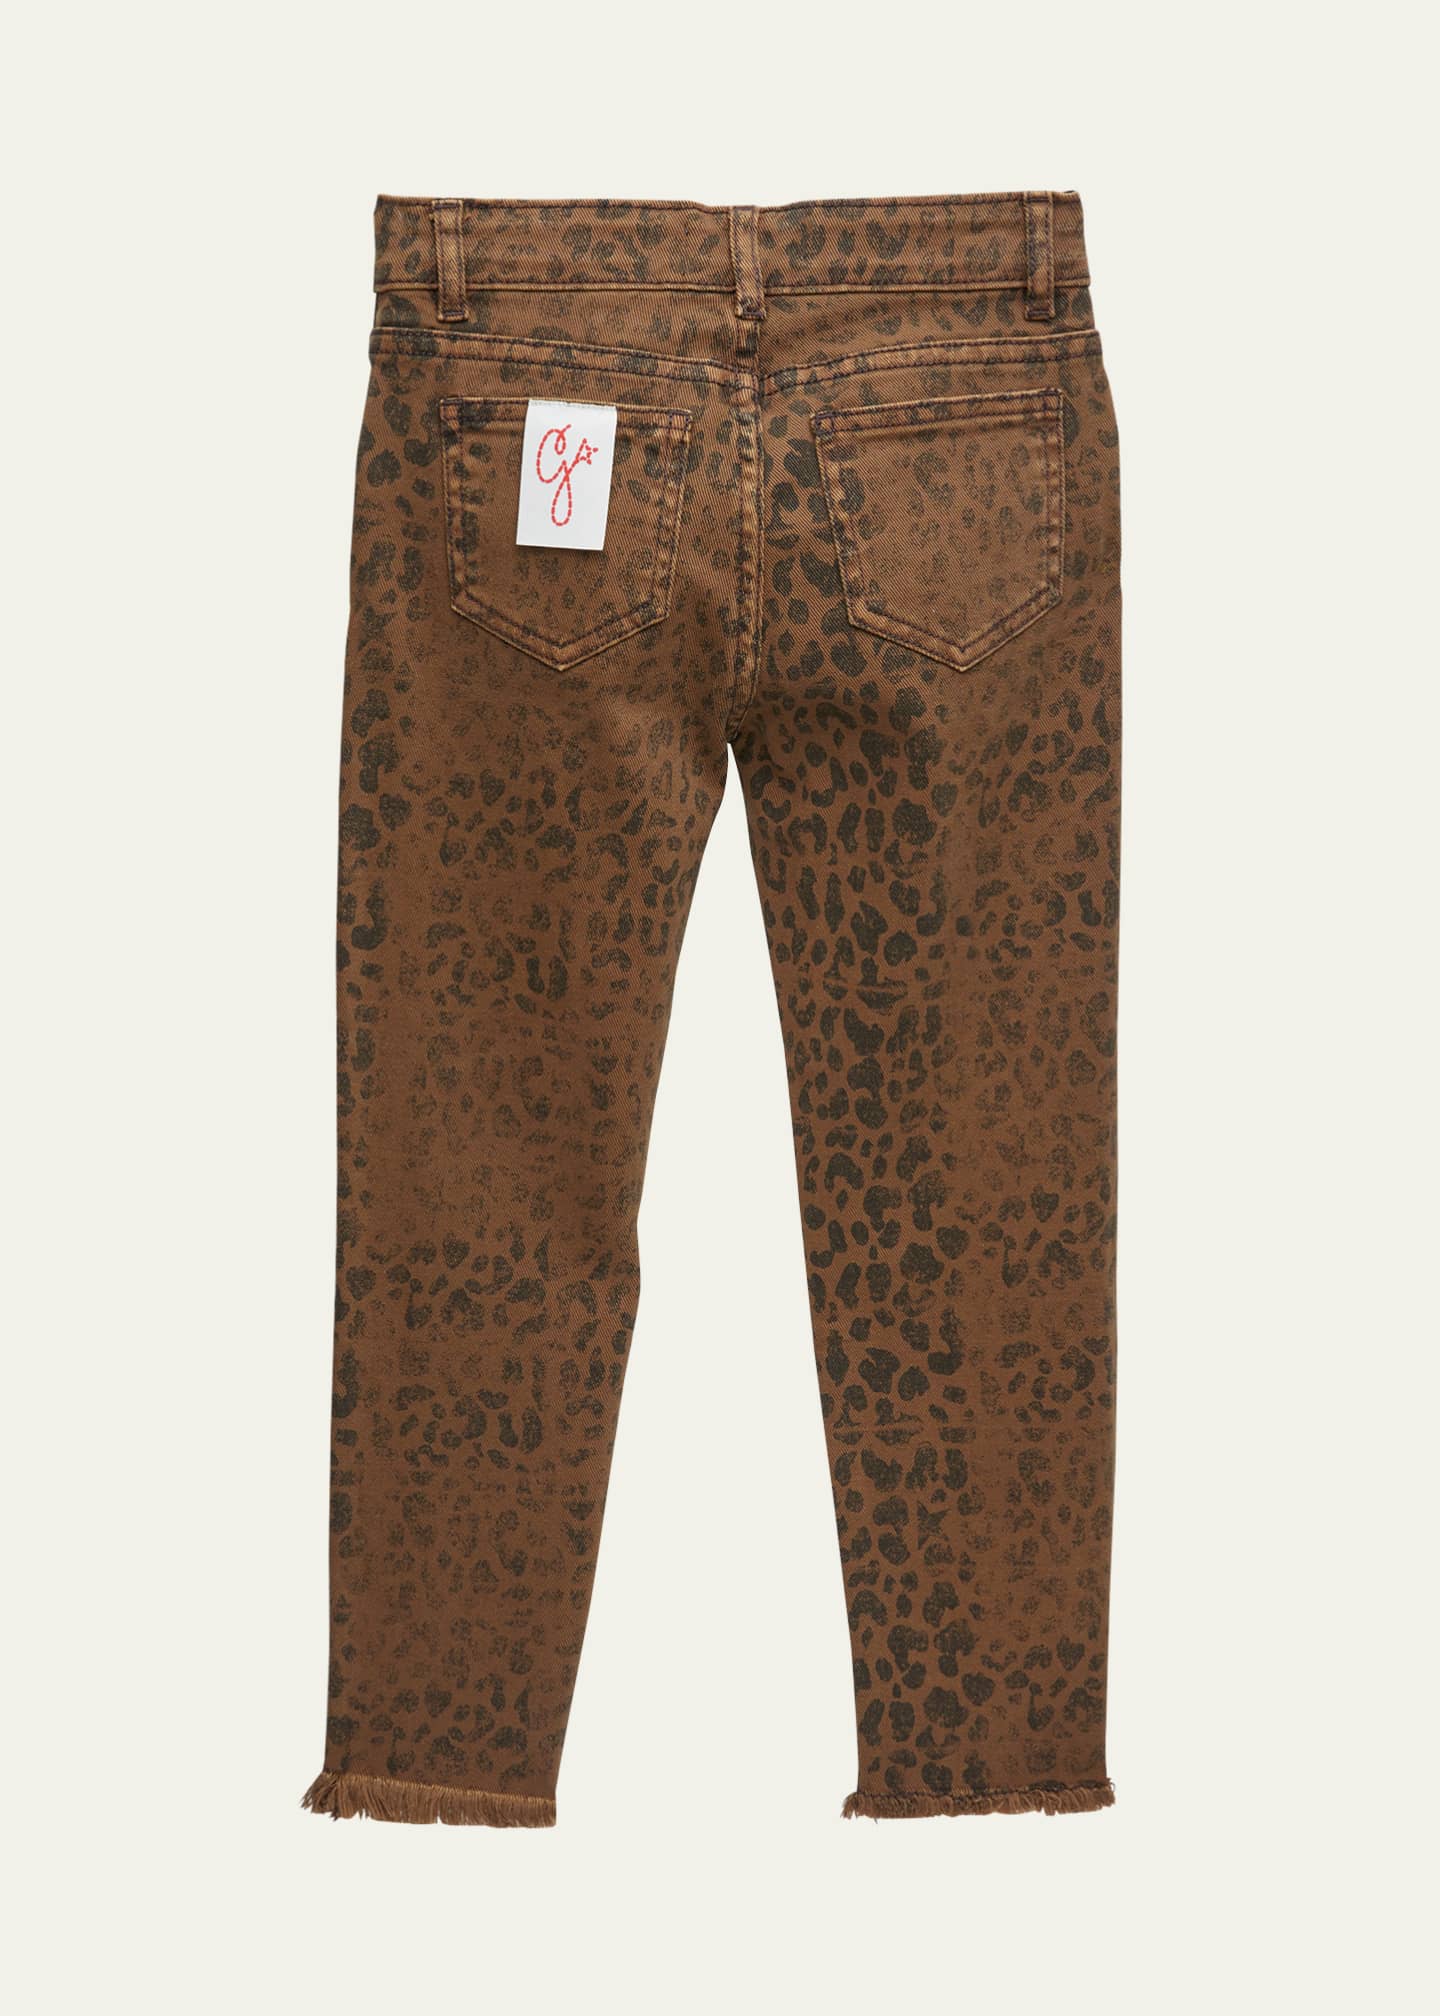 Golden Goose Girl's Faded Leopard-Print Jeans, Size 4-10 - Bergdorf Goodman